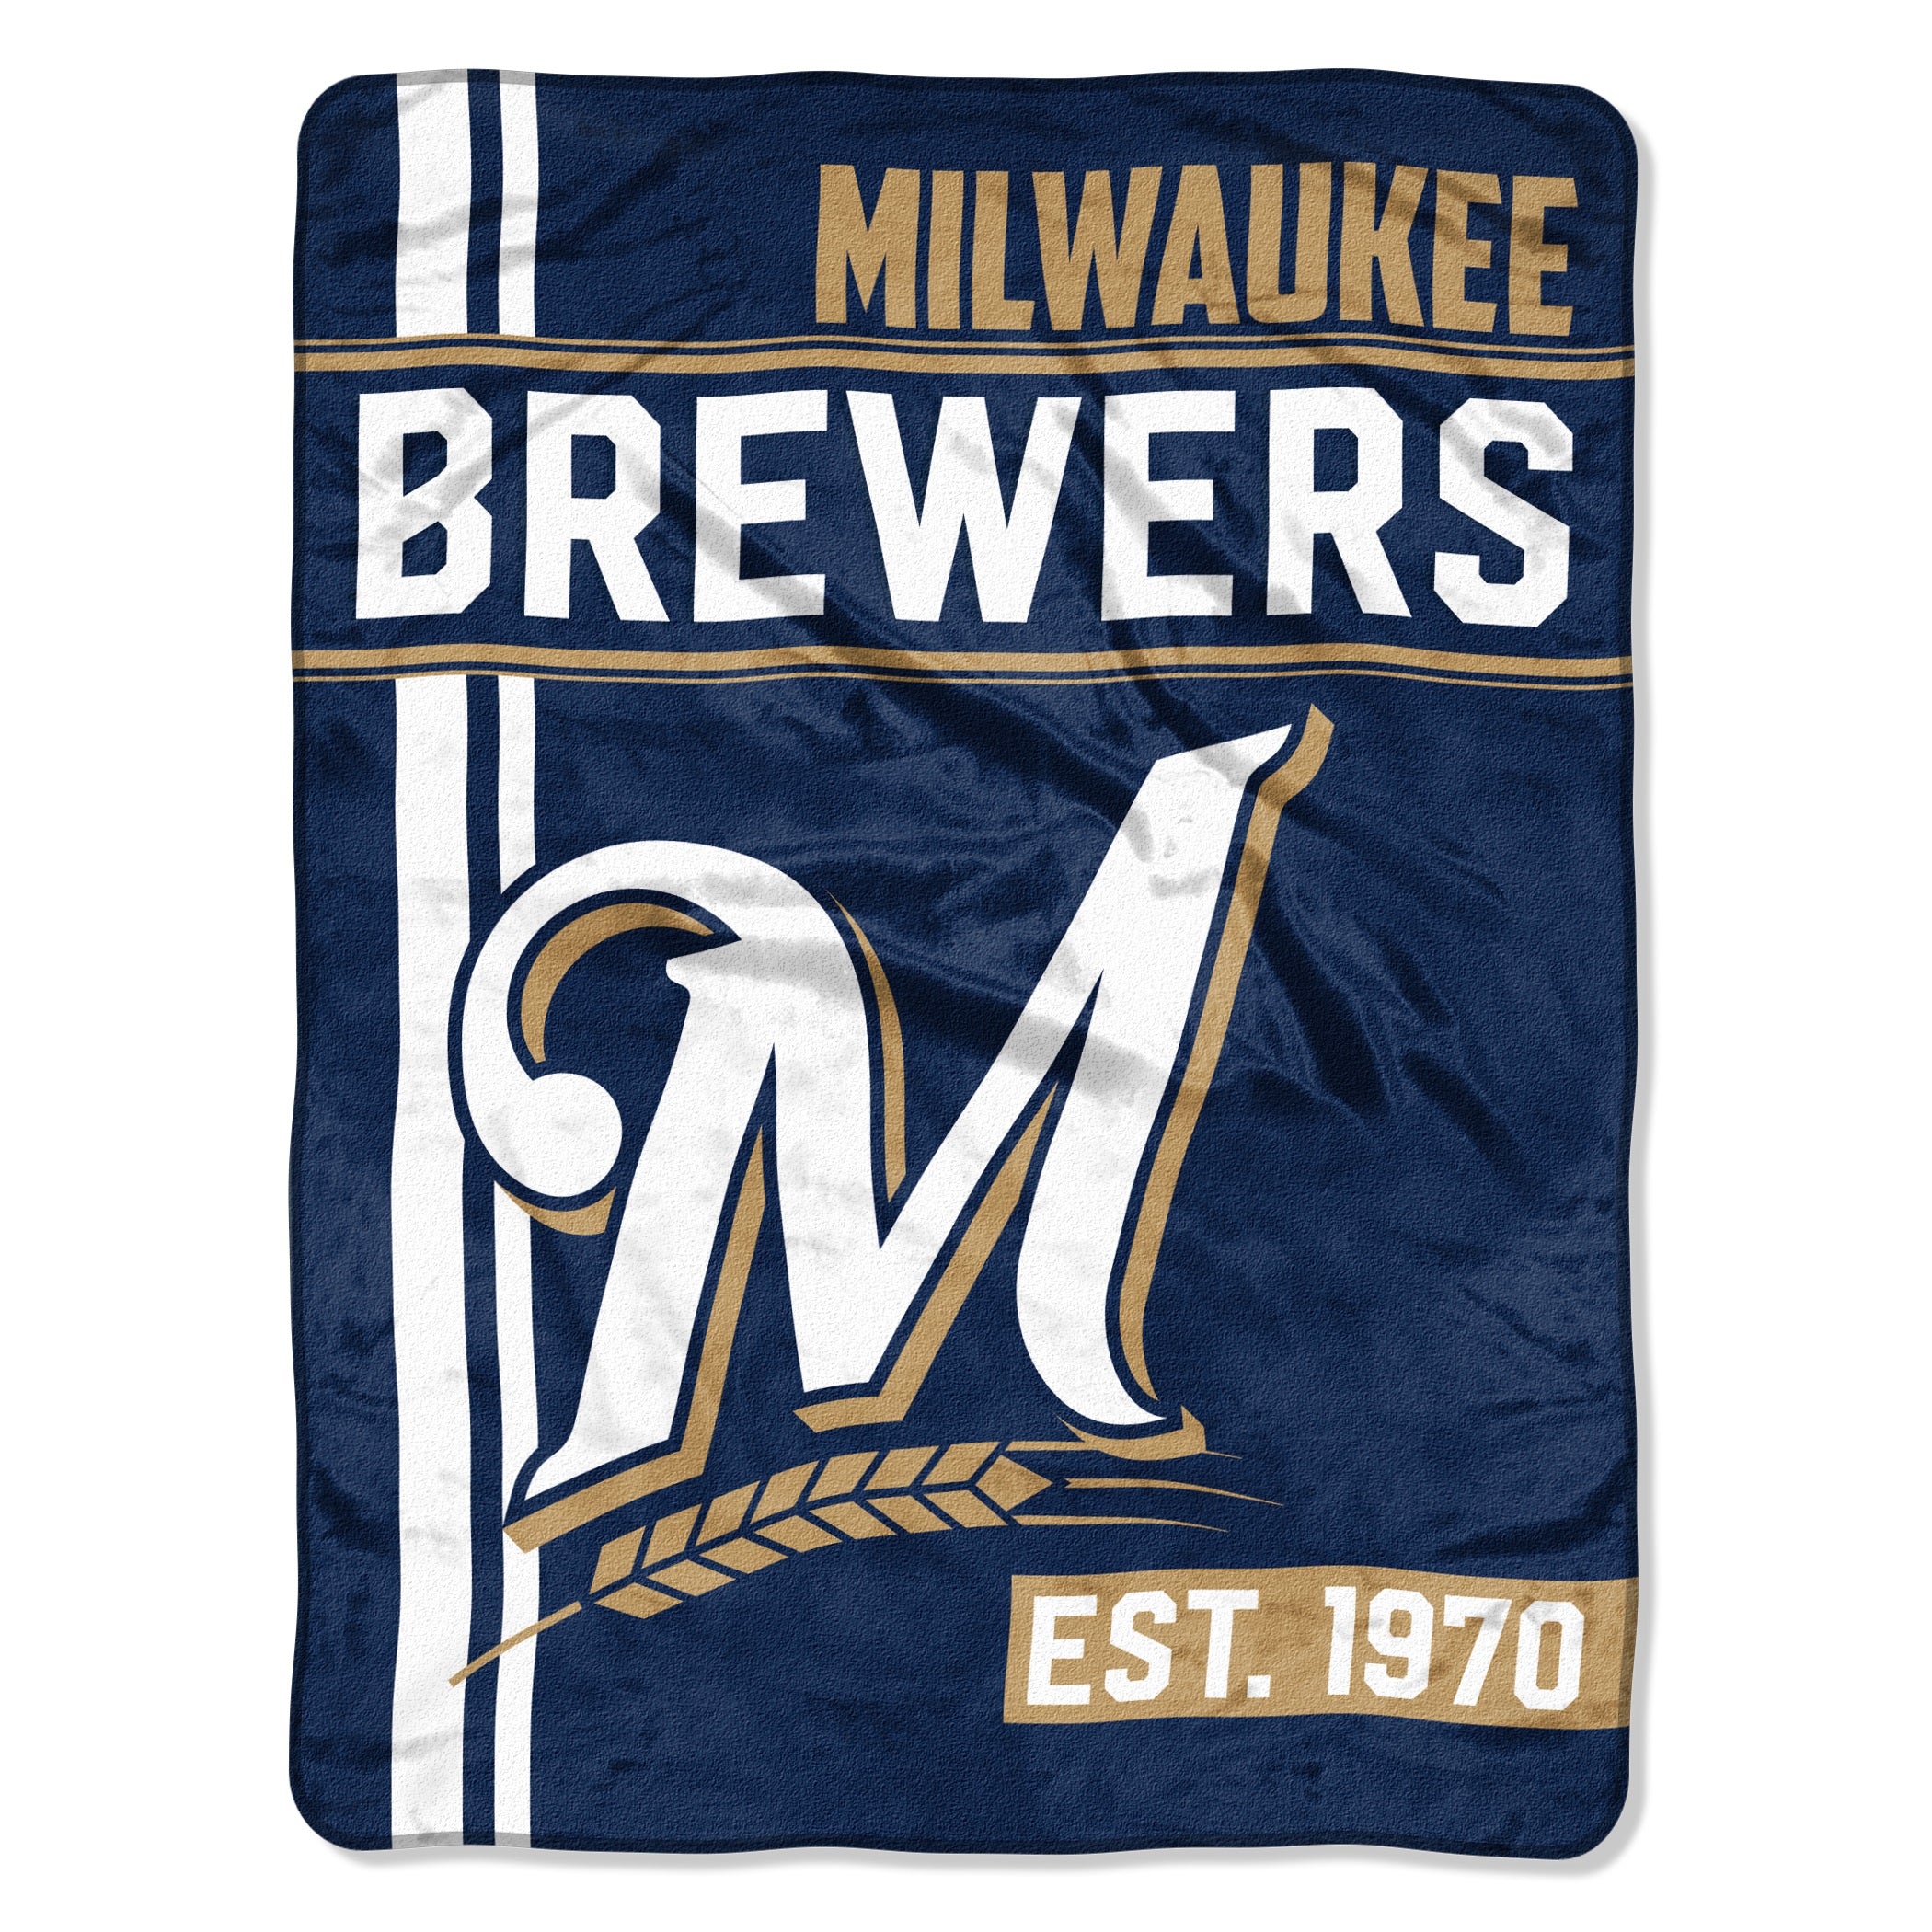 Milwaukee Brewers Blanket 46x60 Micro Raschel Walk Off Design Rolled